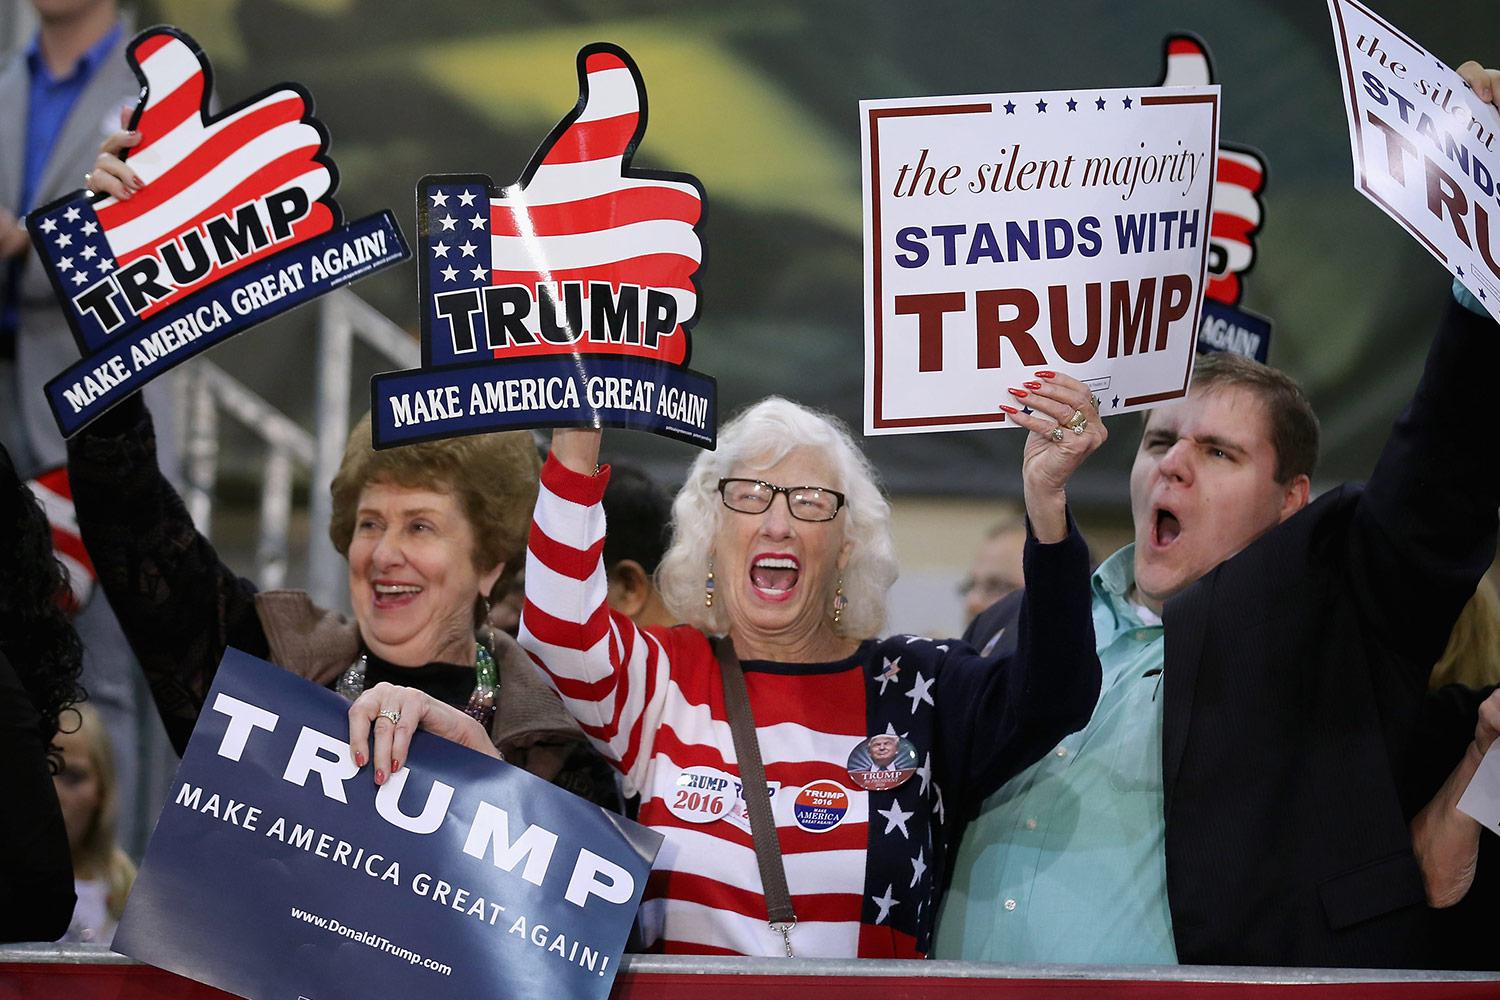 Trump supporters cheer